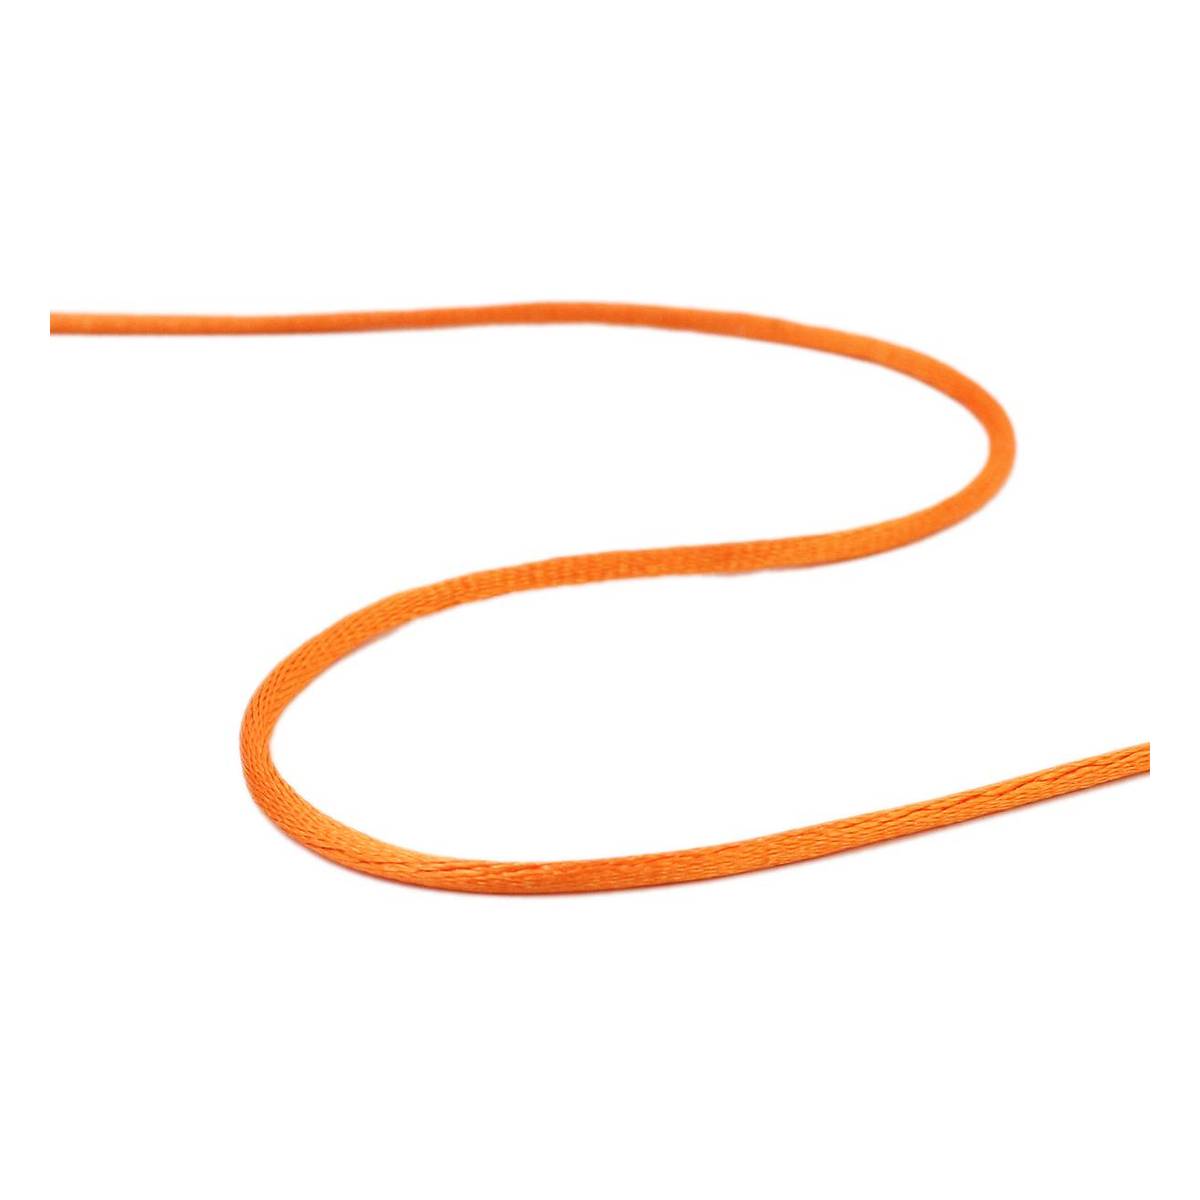 Buy Orange Ribbon Knot Cord 2mm x 10m for GBP 2.00 | Hobbycraft UK